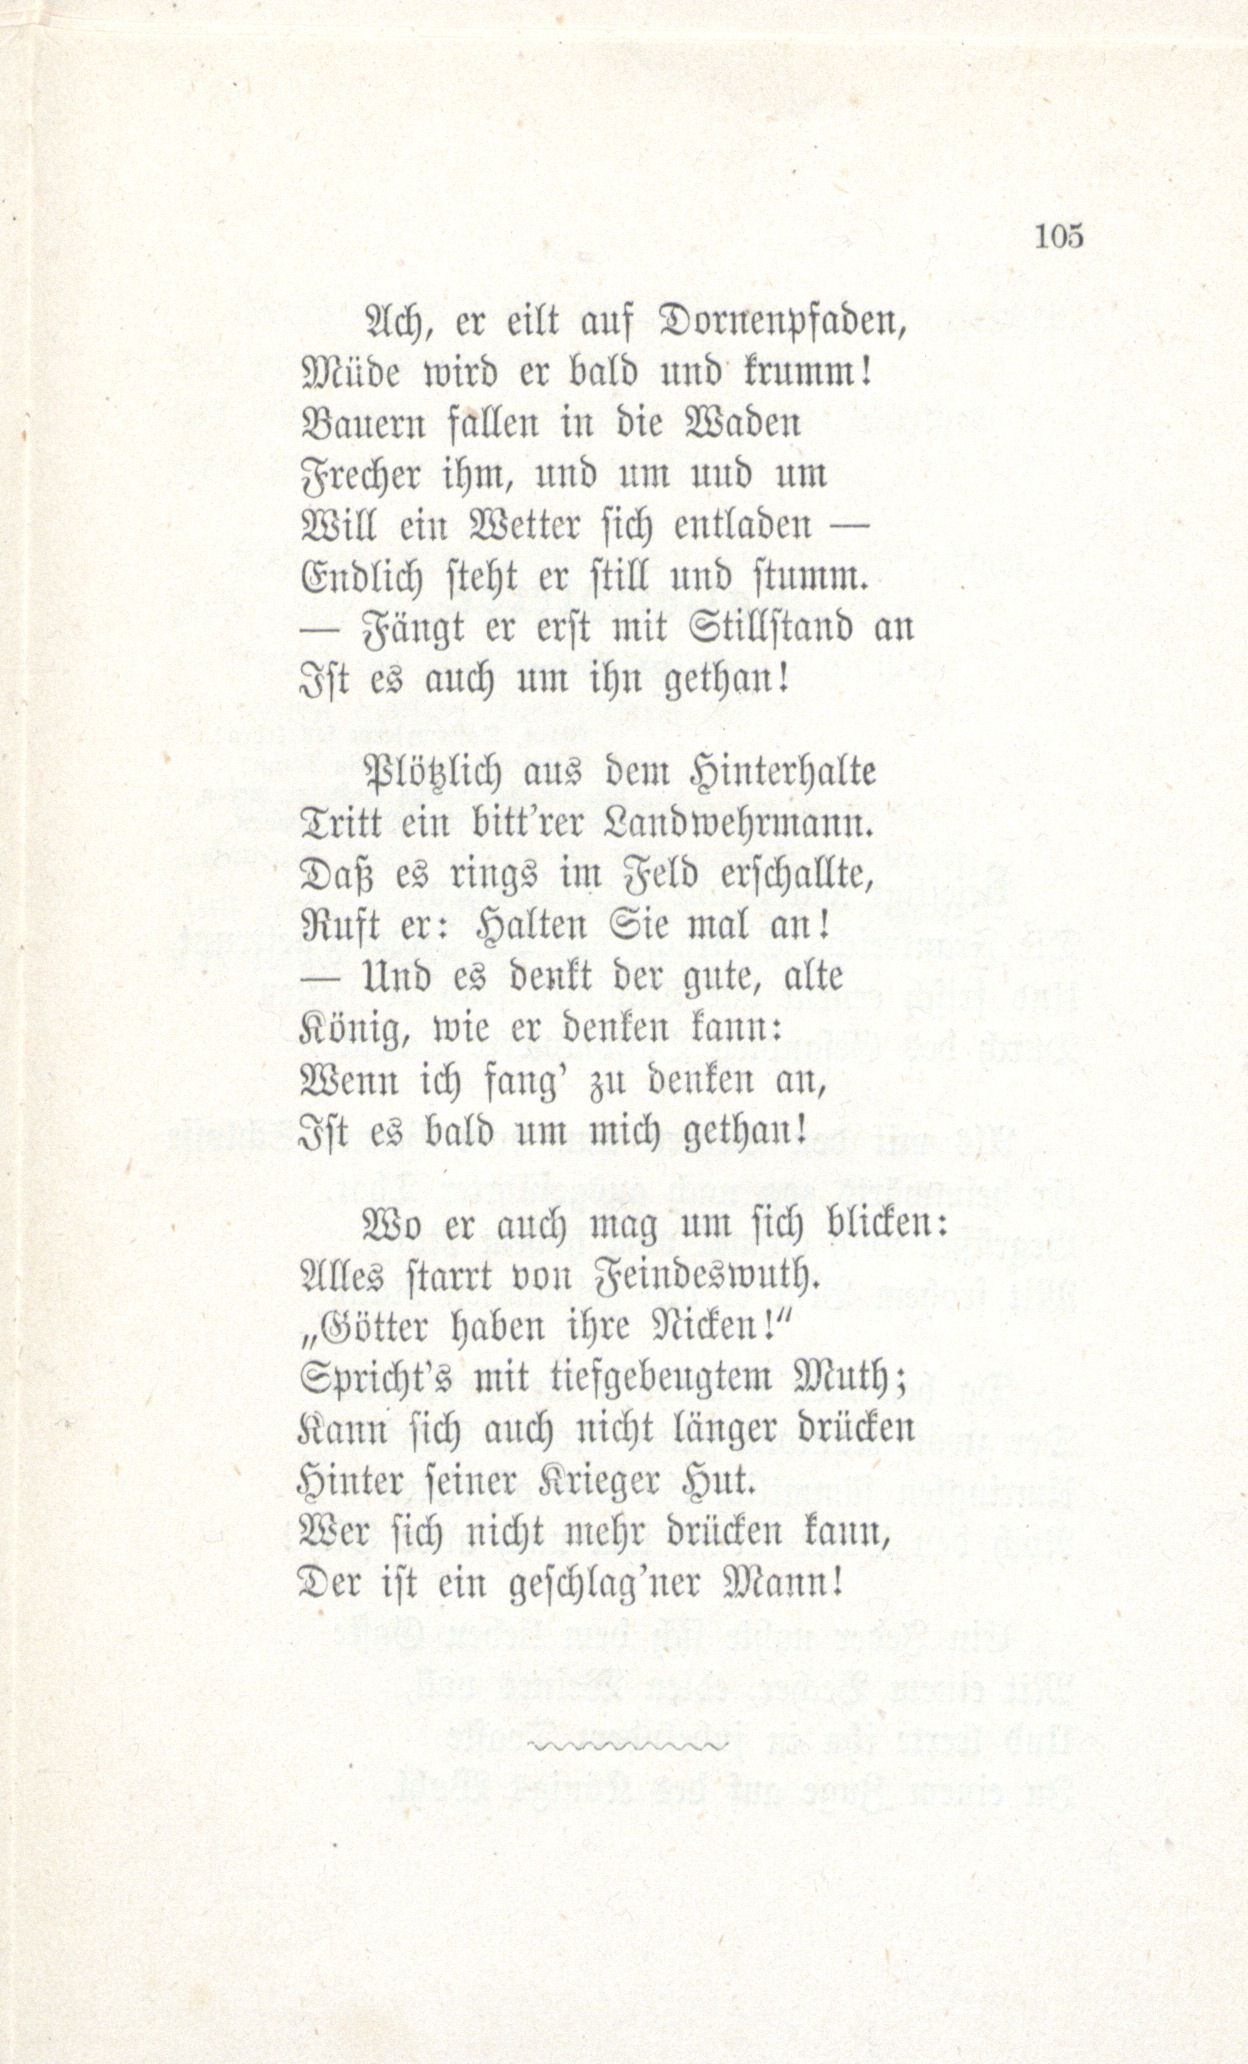 Erinnerung an die Fraternitas (1880) | 106. (105) Main body of text